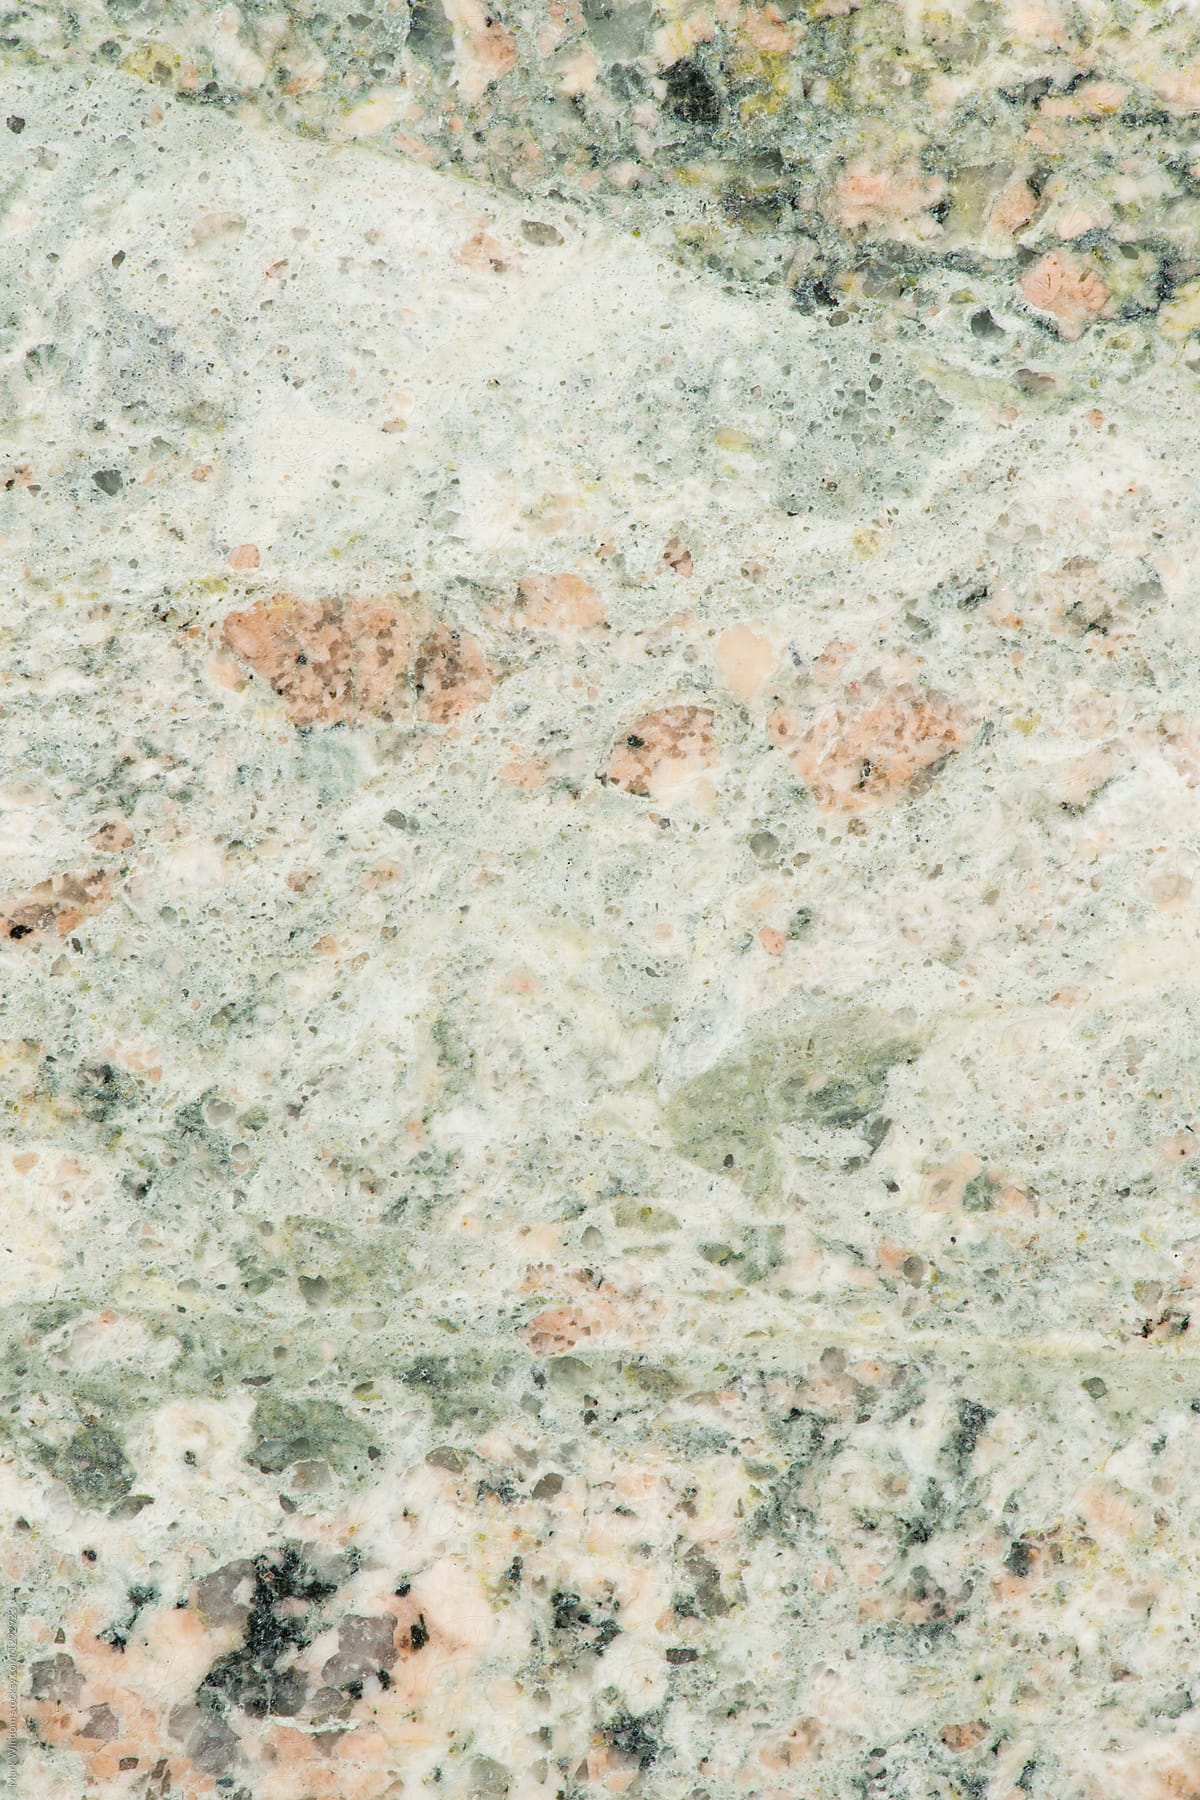 Granite Countertop Background | Stocksy United